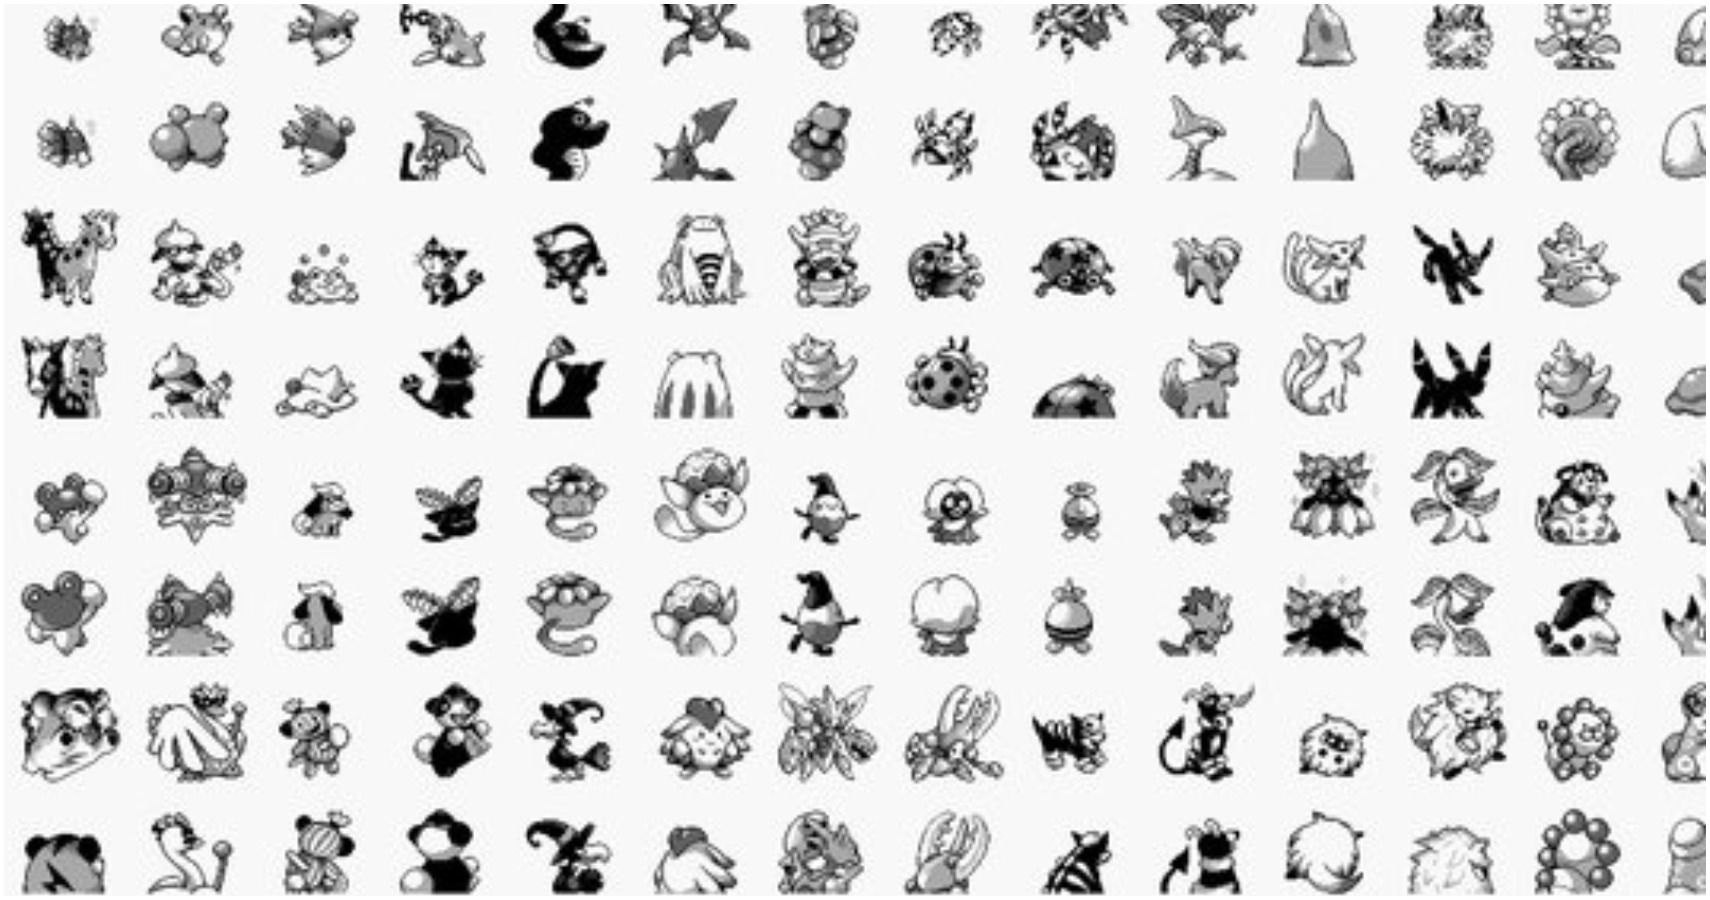 Pokémon Gold & Silver Demo Leak Reveals Atomic Bomb Origins Of The 'Unown